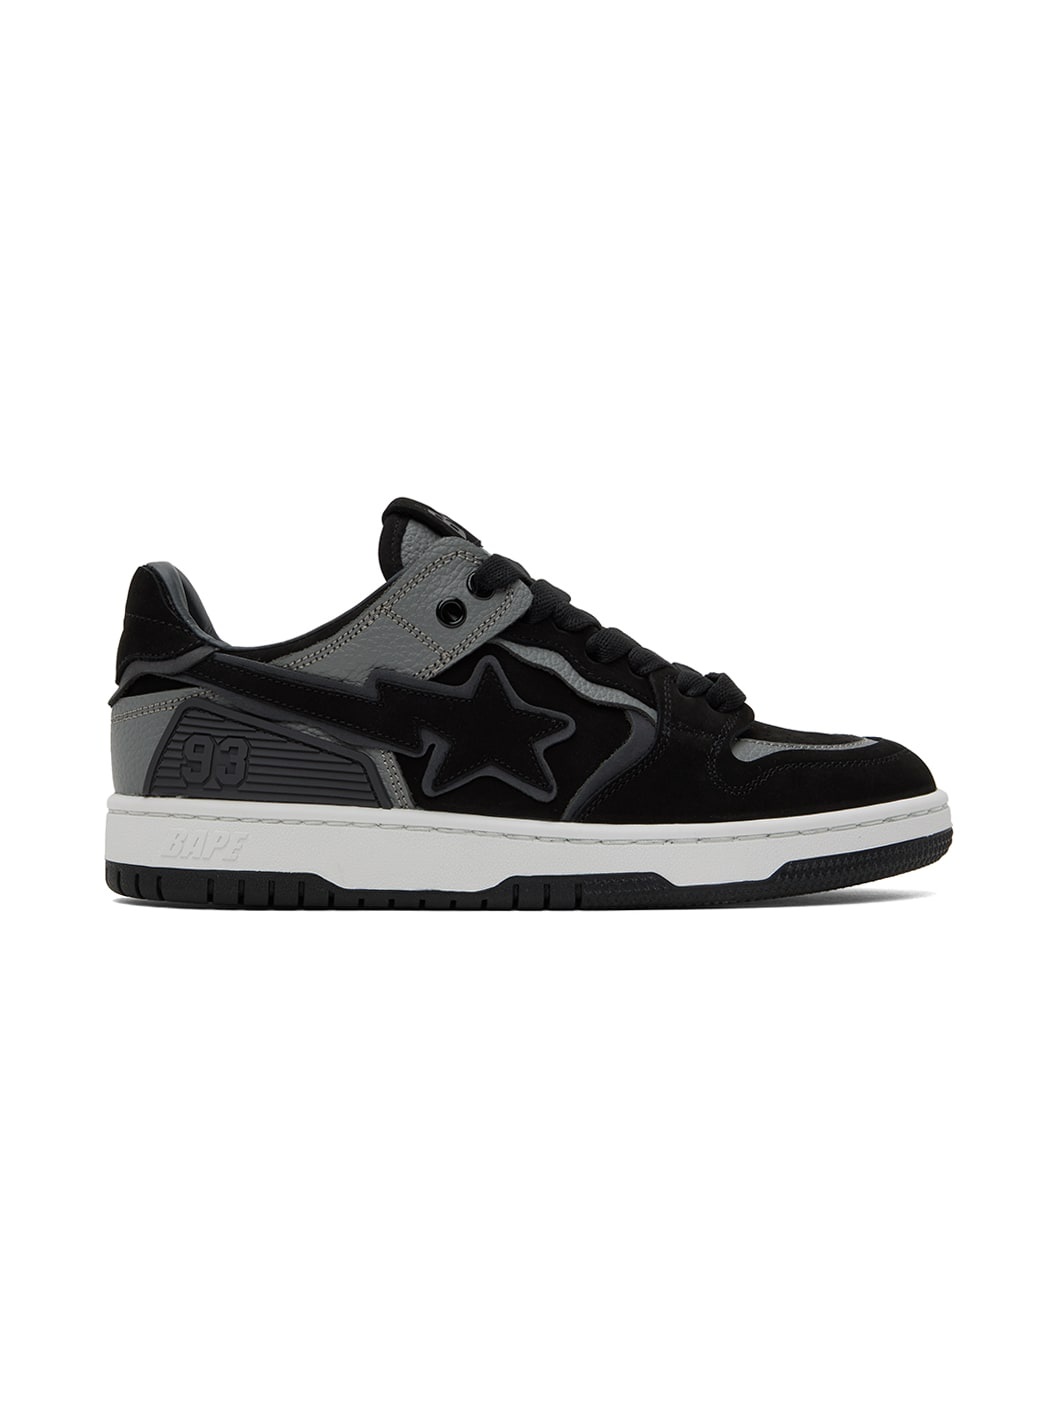 Black & Gray Sk8 Sta #6 M2 Sneakers - 1